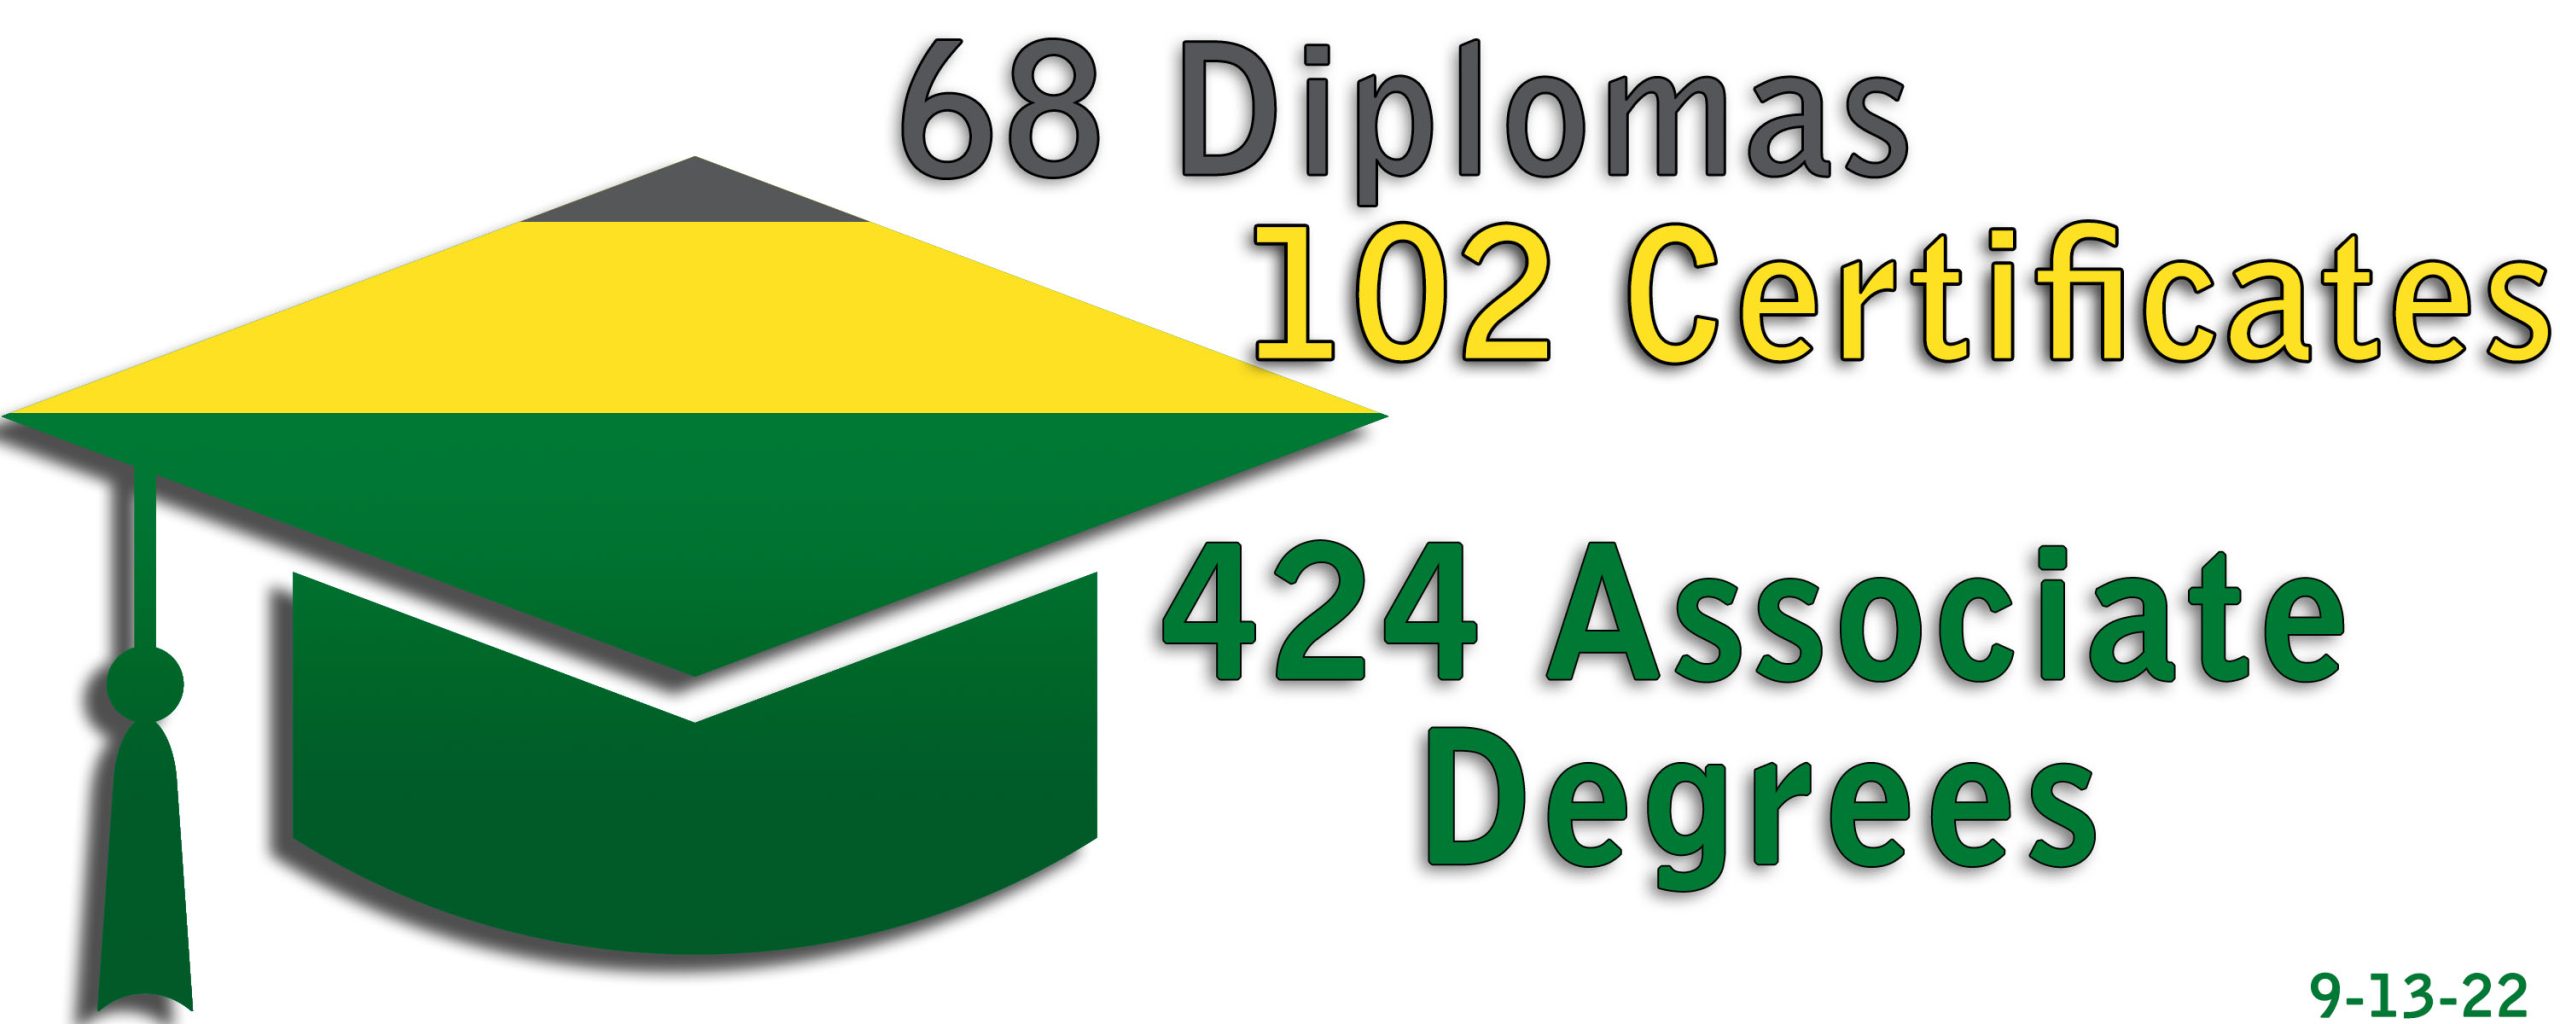 Green and yellow graduation cap - 68 Diplomas, 102 Certificates, 424 Associate Degrees